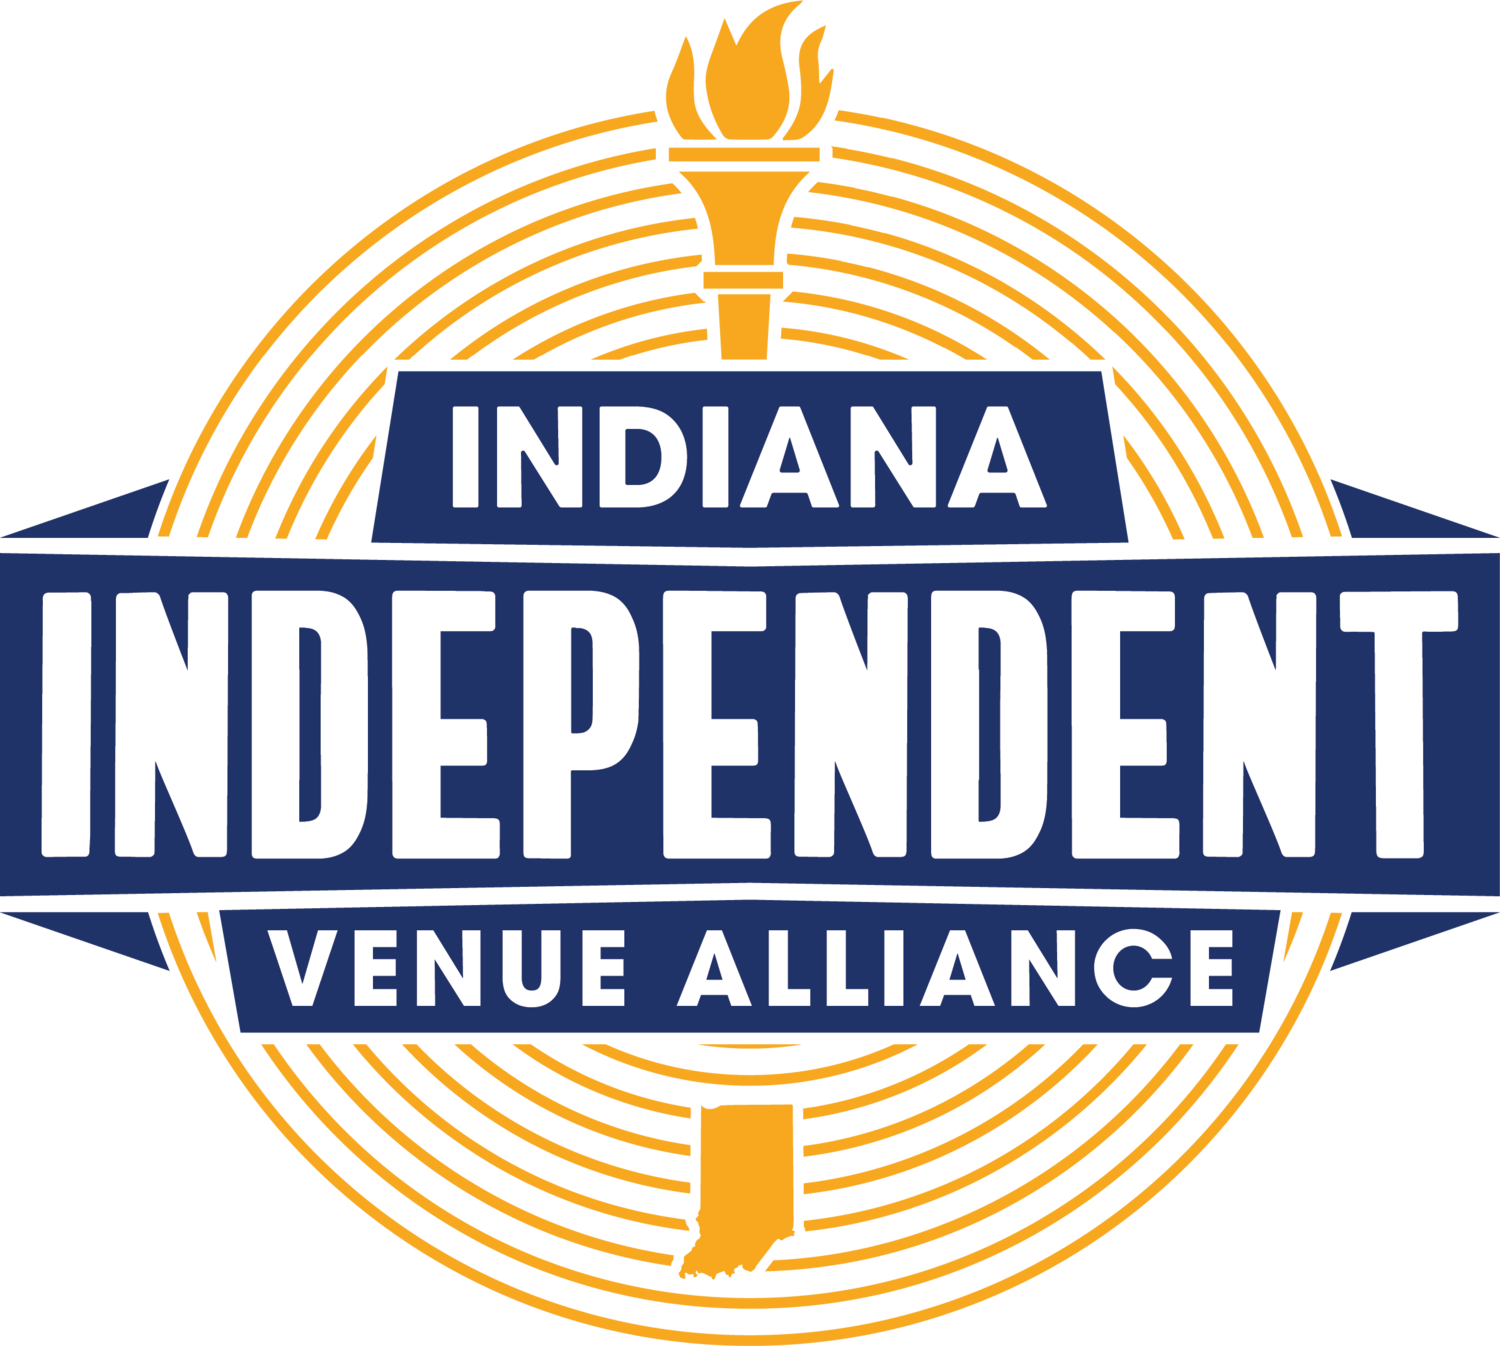 Indiana Venue Alliance